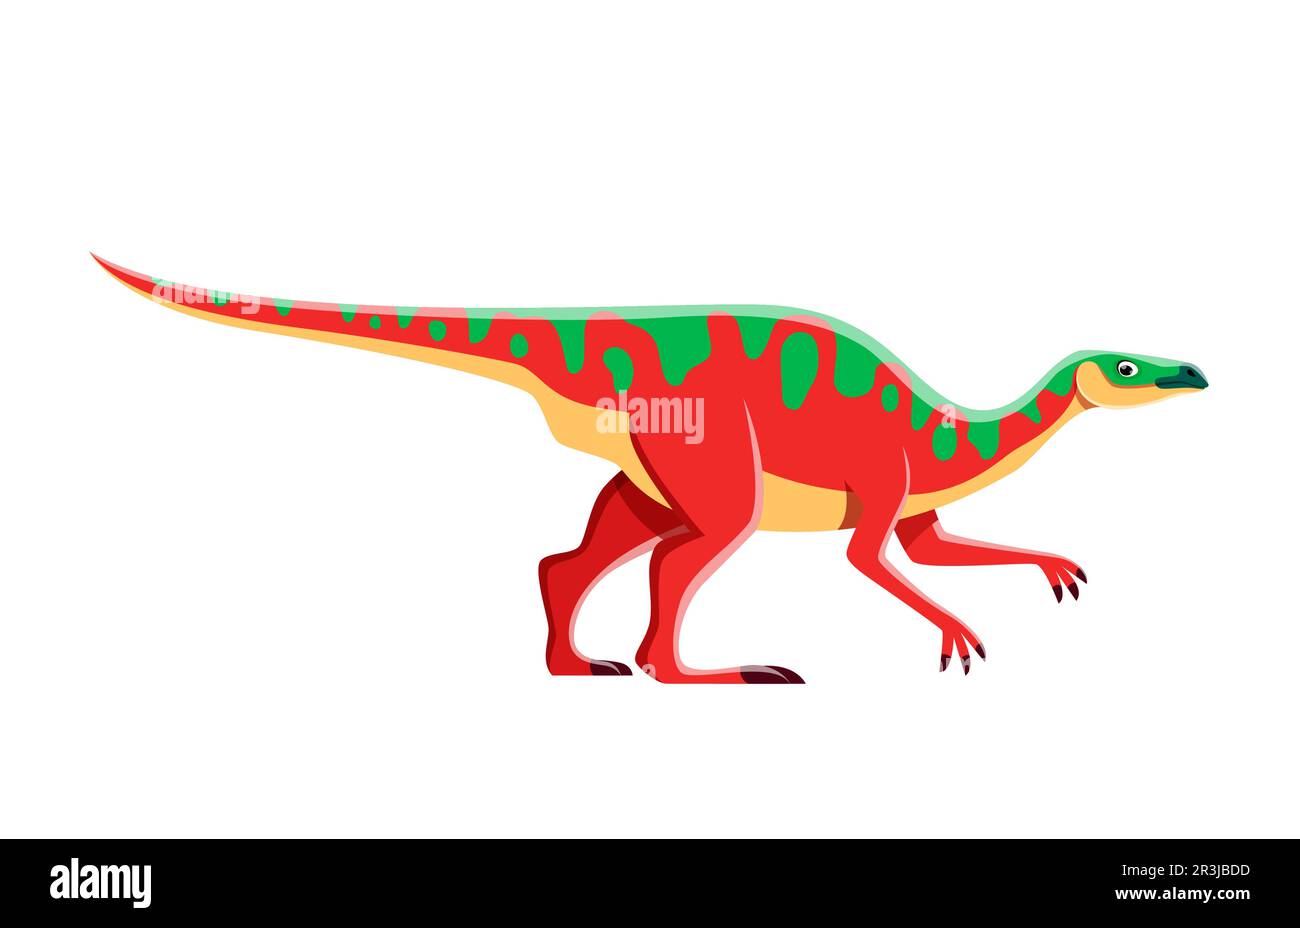 Cartoon Anatotitan dinosaur character, dino toy or Jurassic Park funny cute vector animal. Anatotitan dinosaur or Edmontosaurus annectens prehistoric Jurassic reptile with smile face Stock Vector